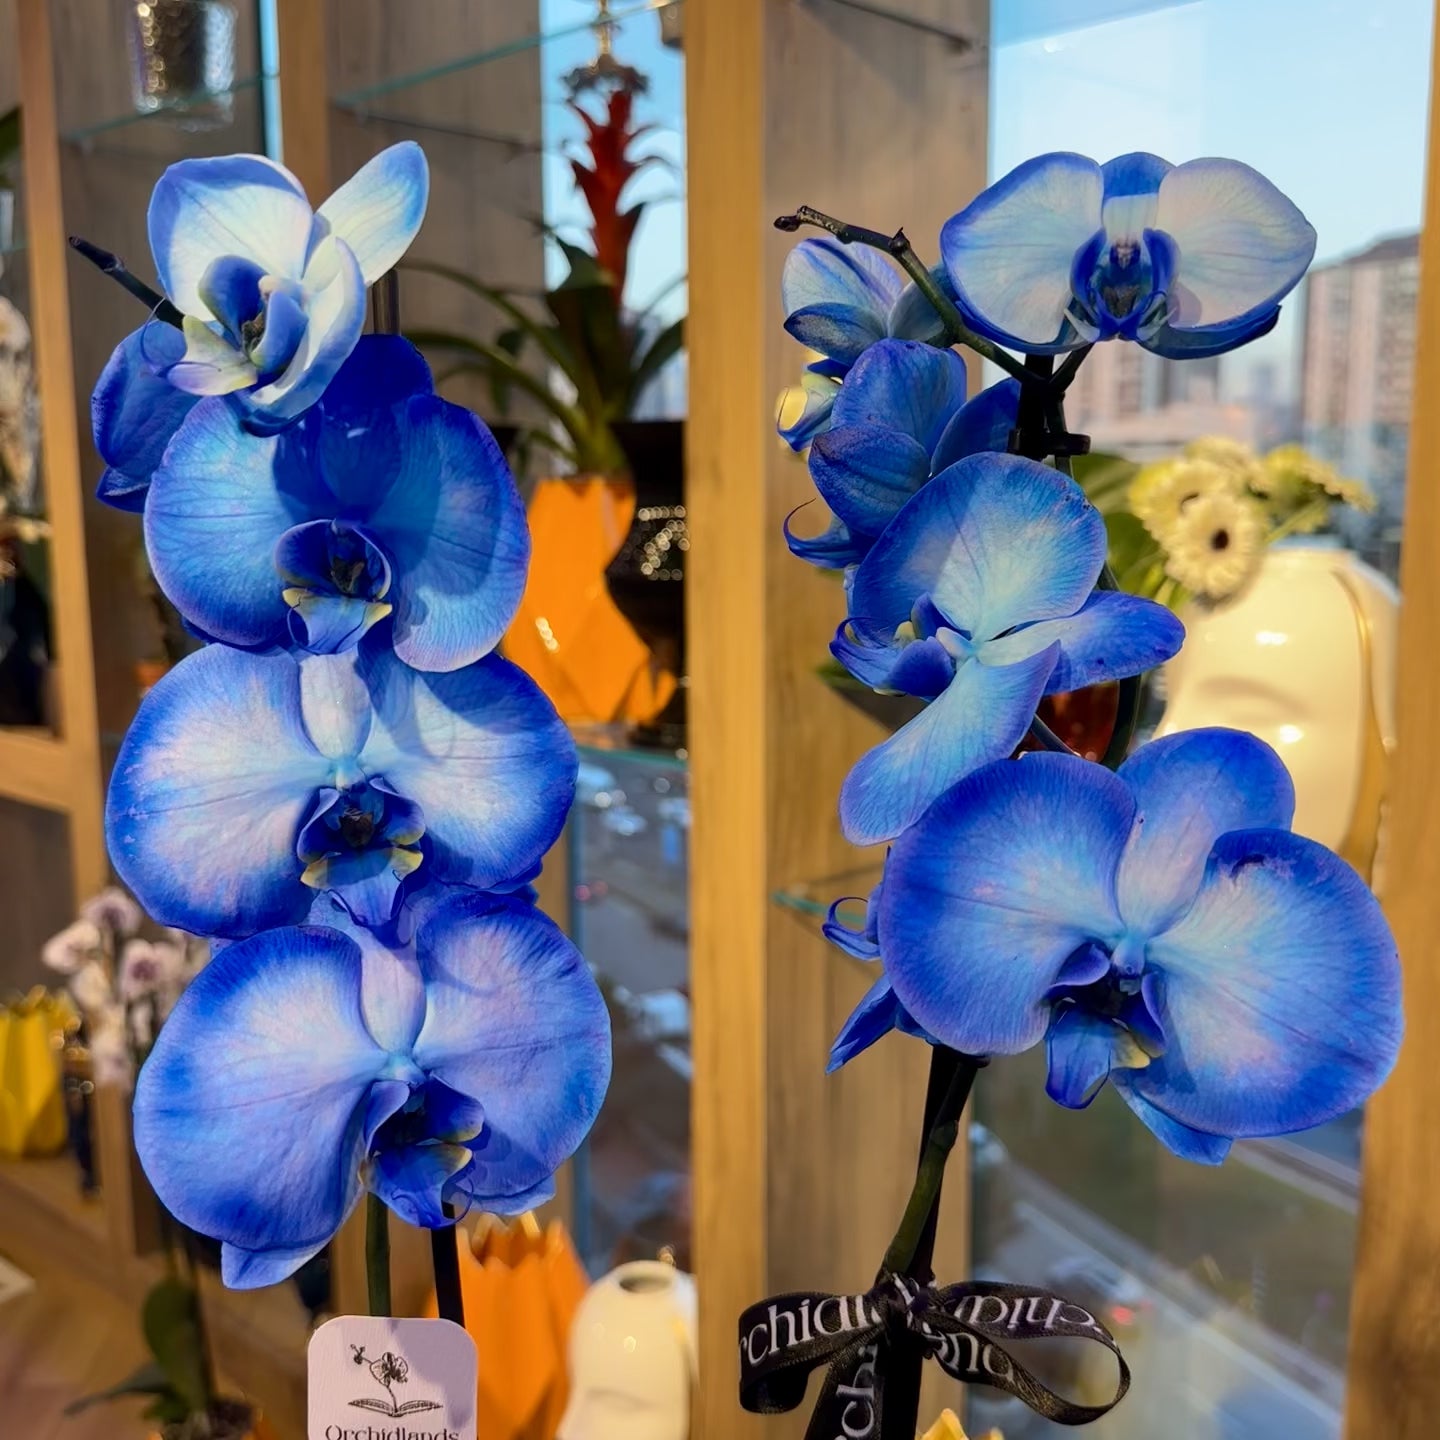 Mavi Orkide Çift Dal